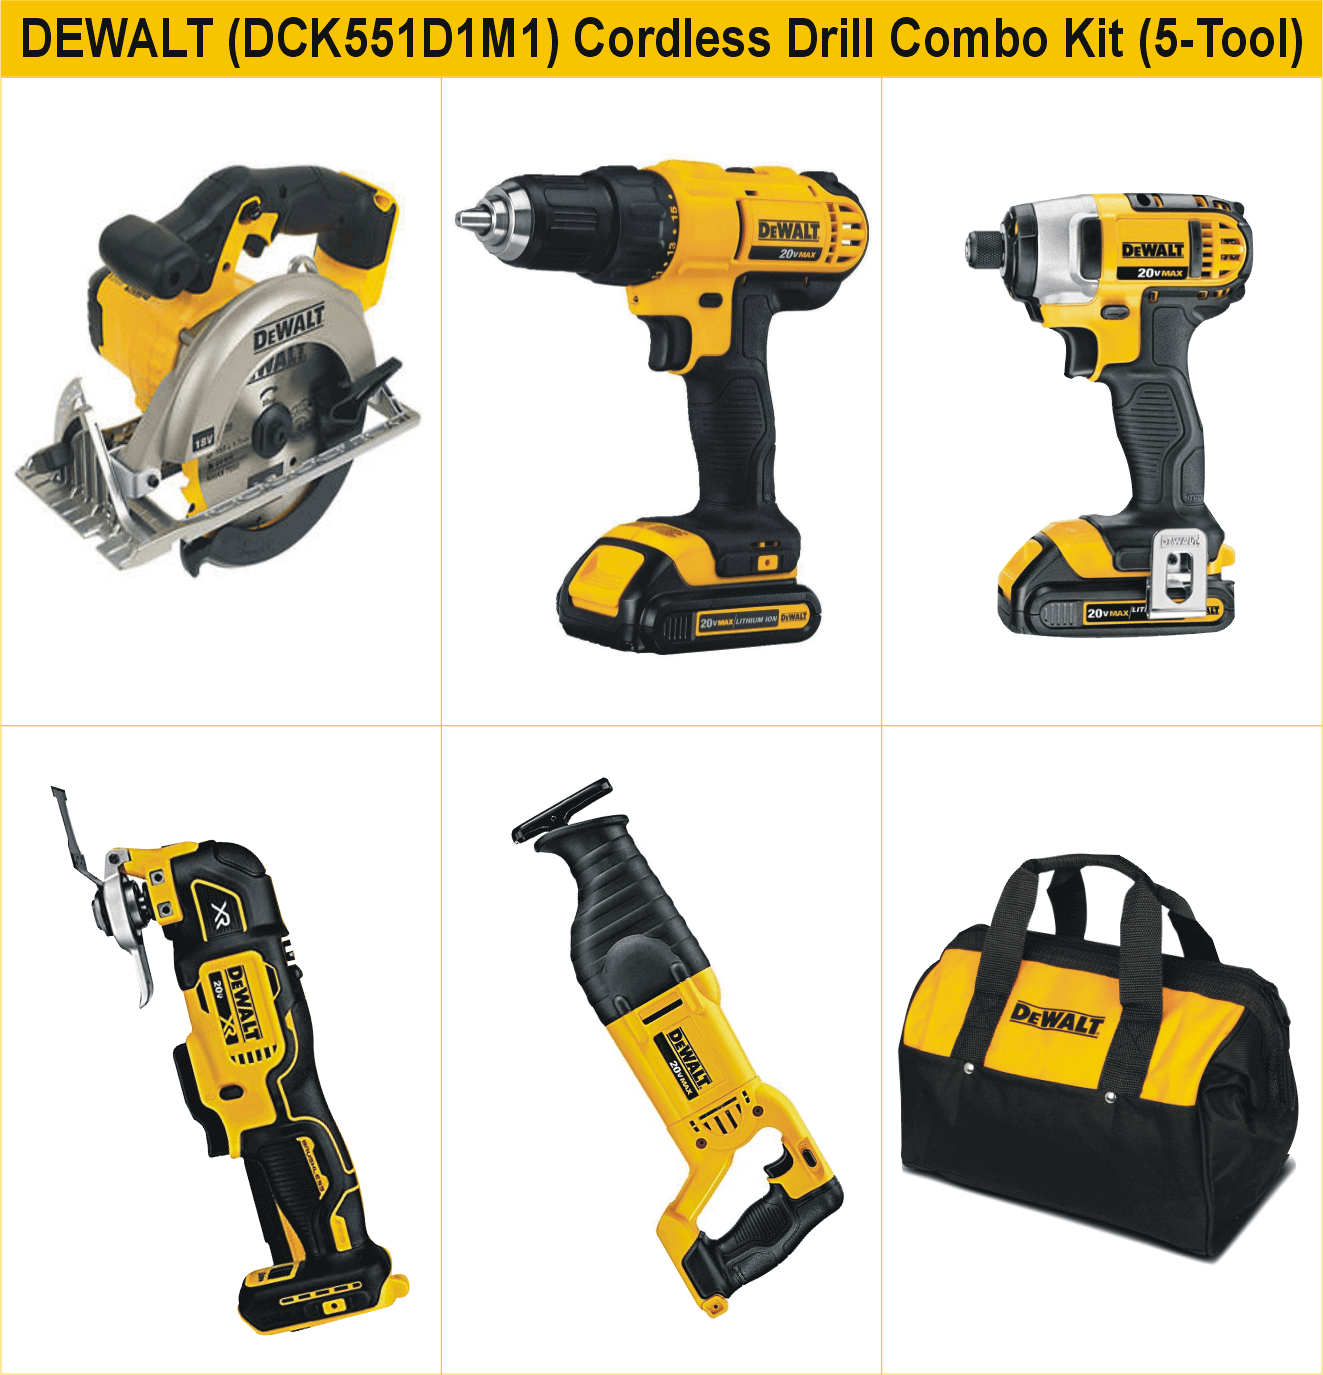 DEWALT (DCK551D1M1) 20V MAX Cordless Drill 5-Tool Combo Kit